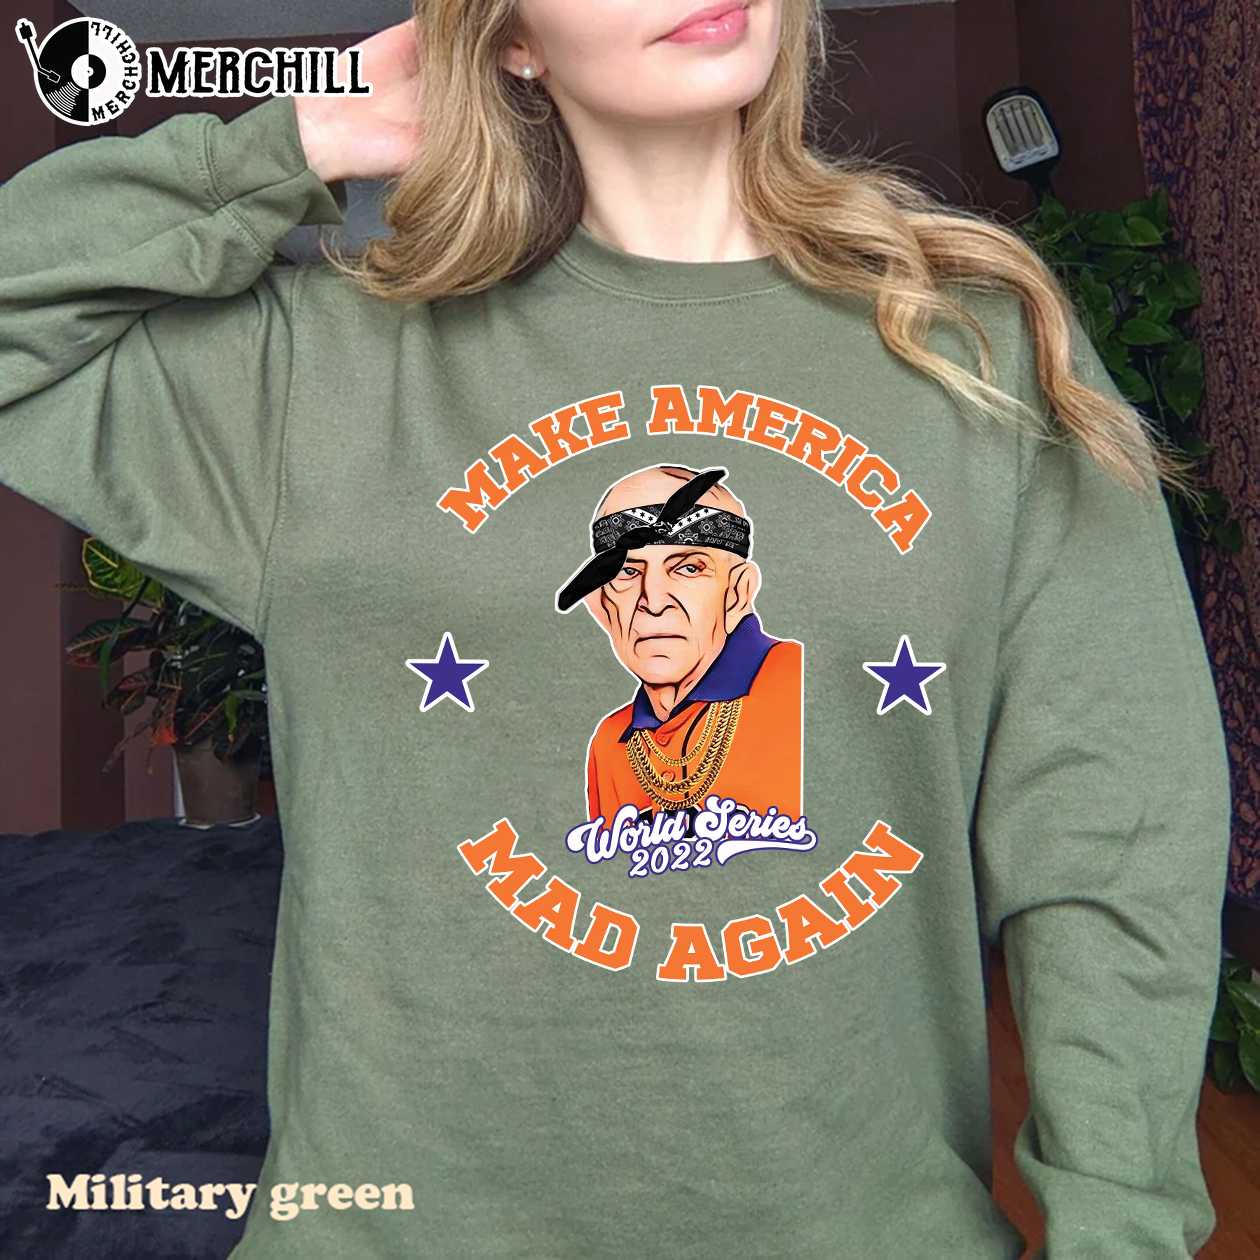 Make America Mad Again Astros Bella Canvas Shirt Adult X-Large